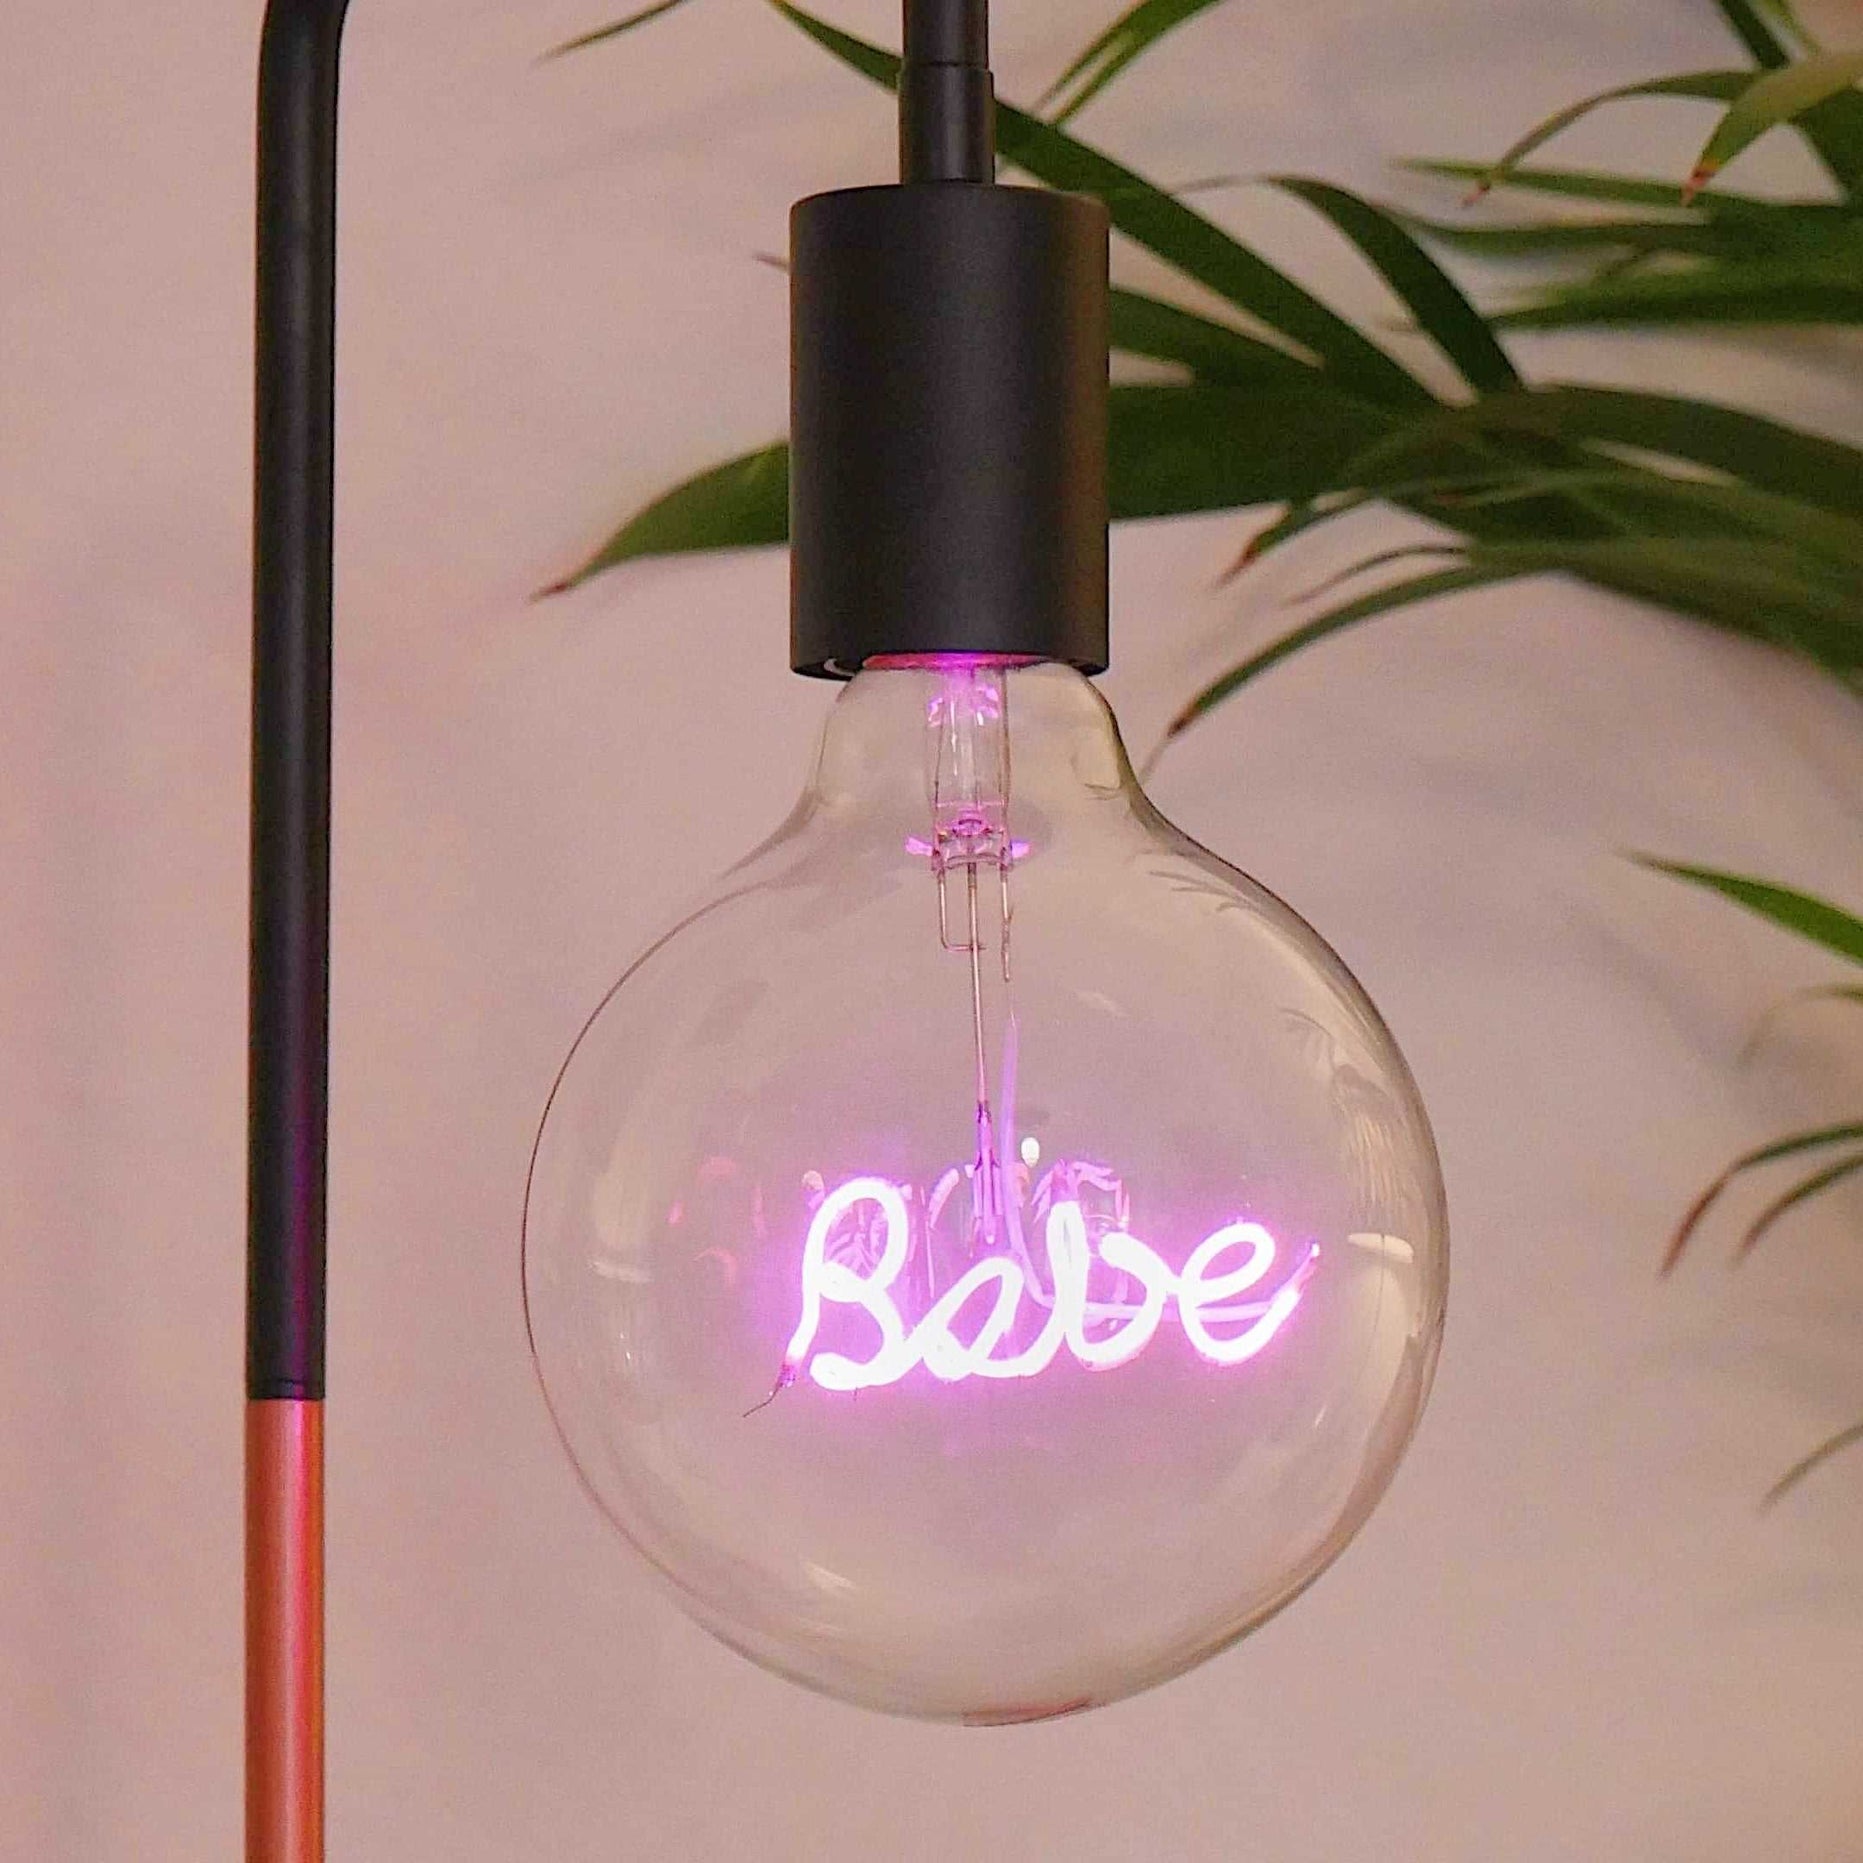 Babe LED Light Bulb - Screw Up Pendant Fitting - E27 Edison Dimmable